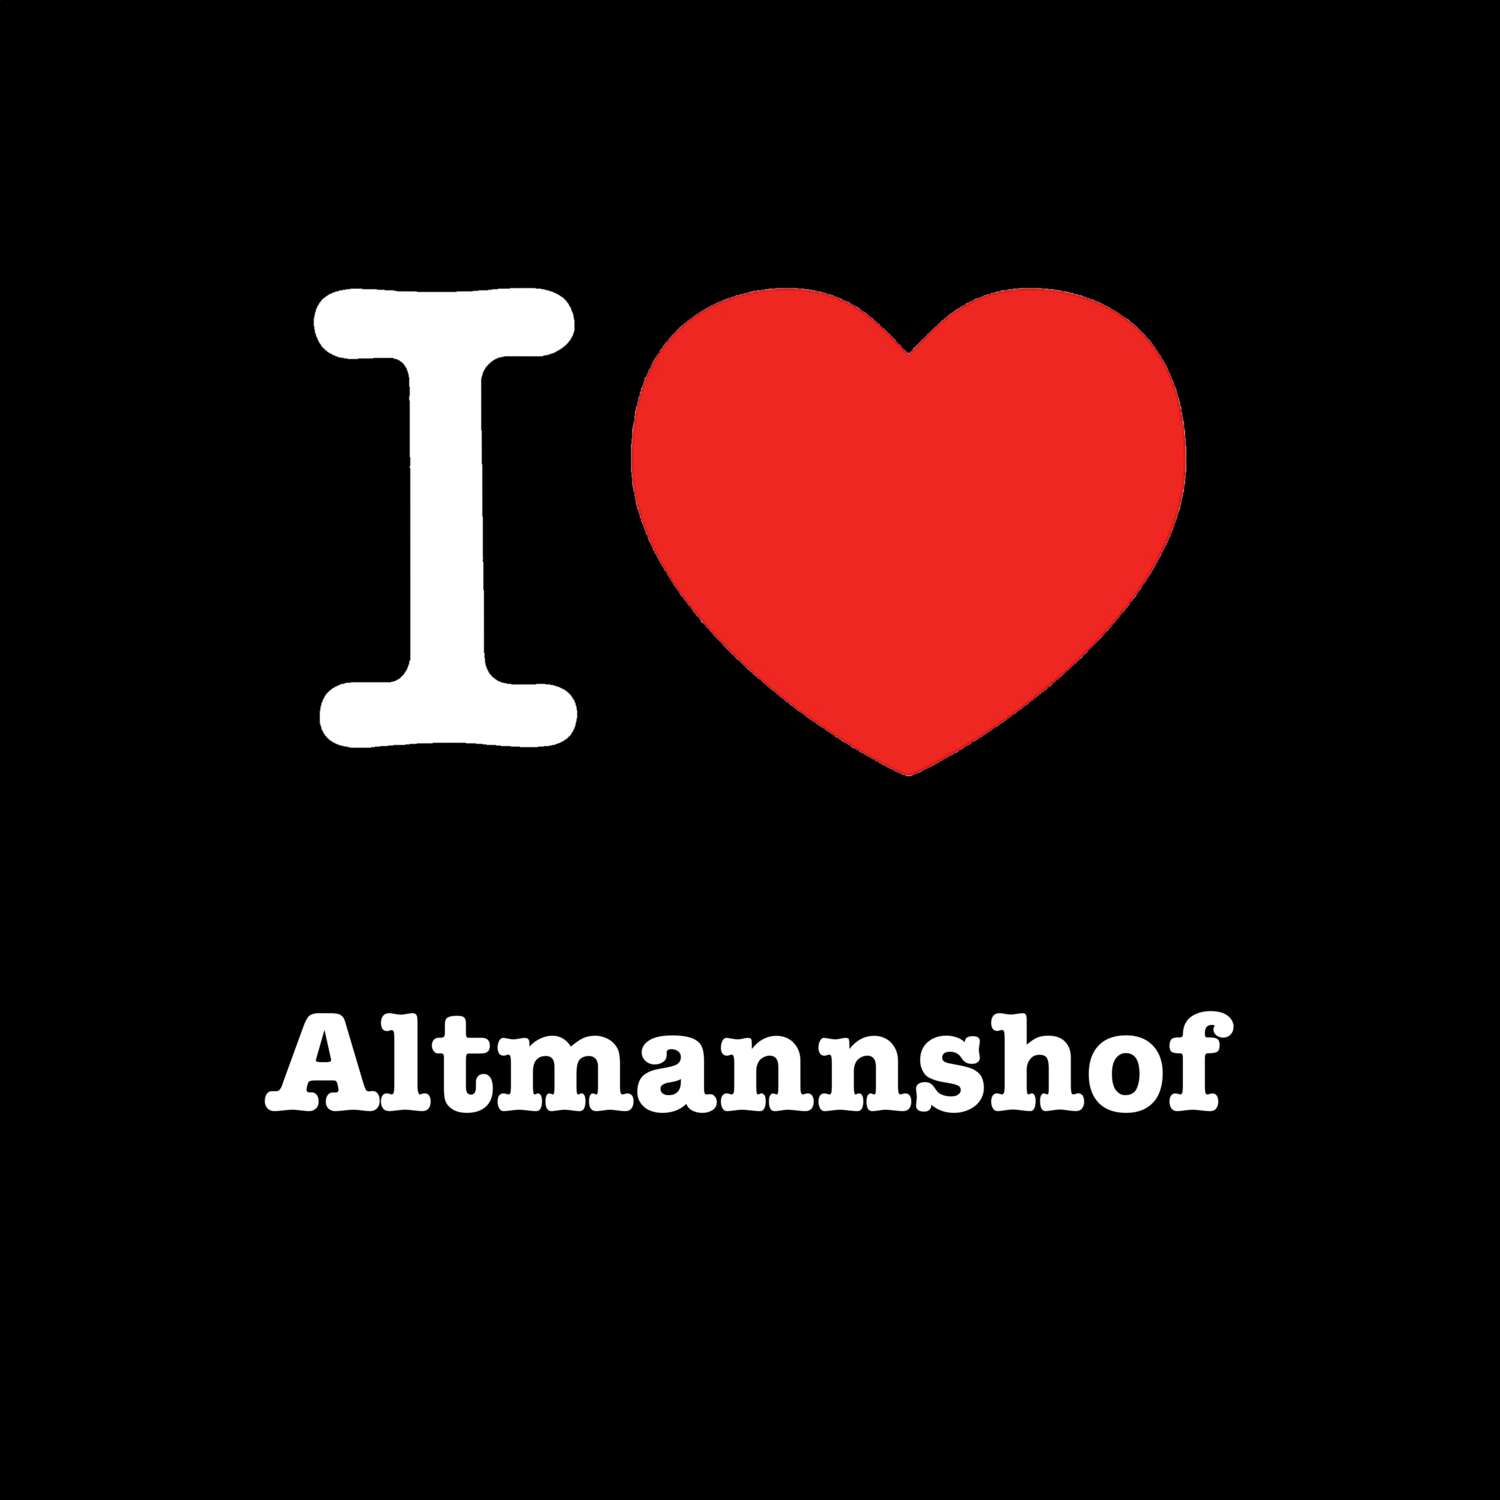 Altmannshof T-Shirt »I love«